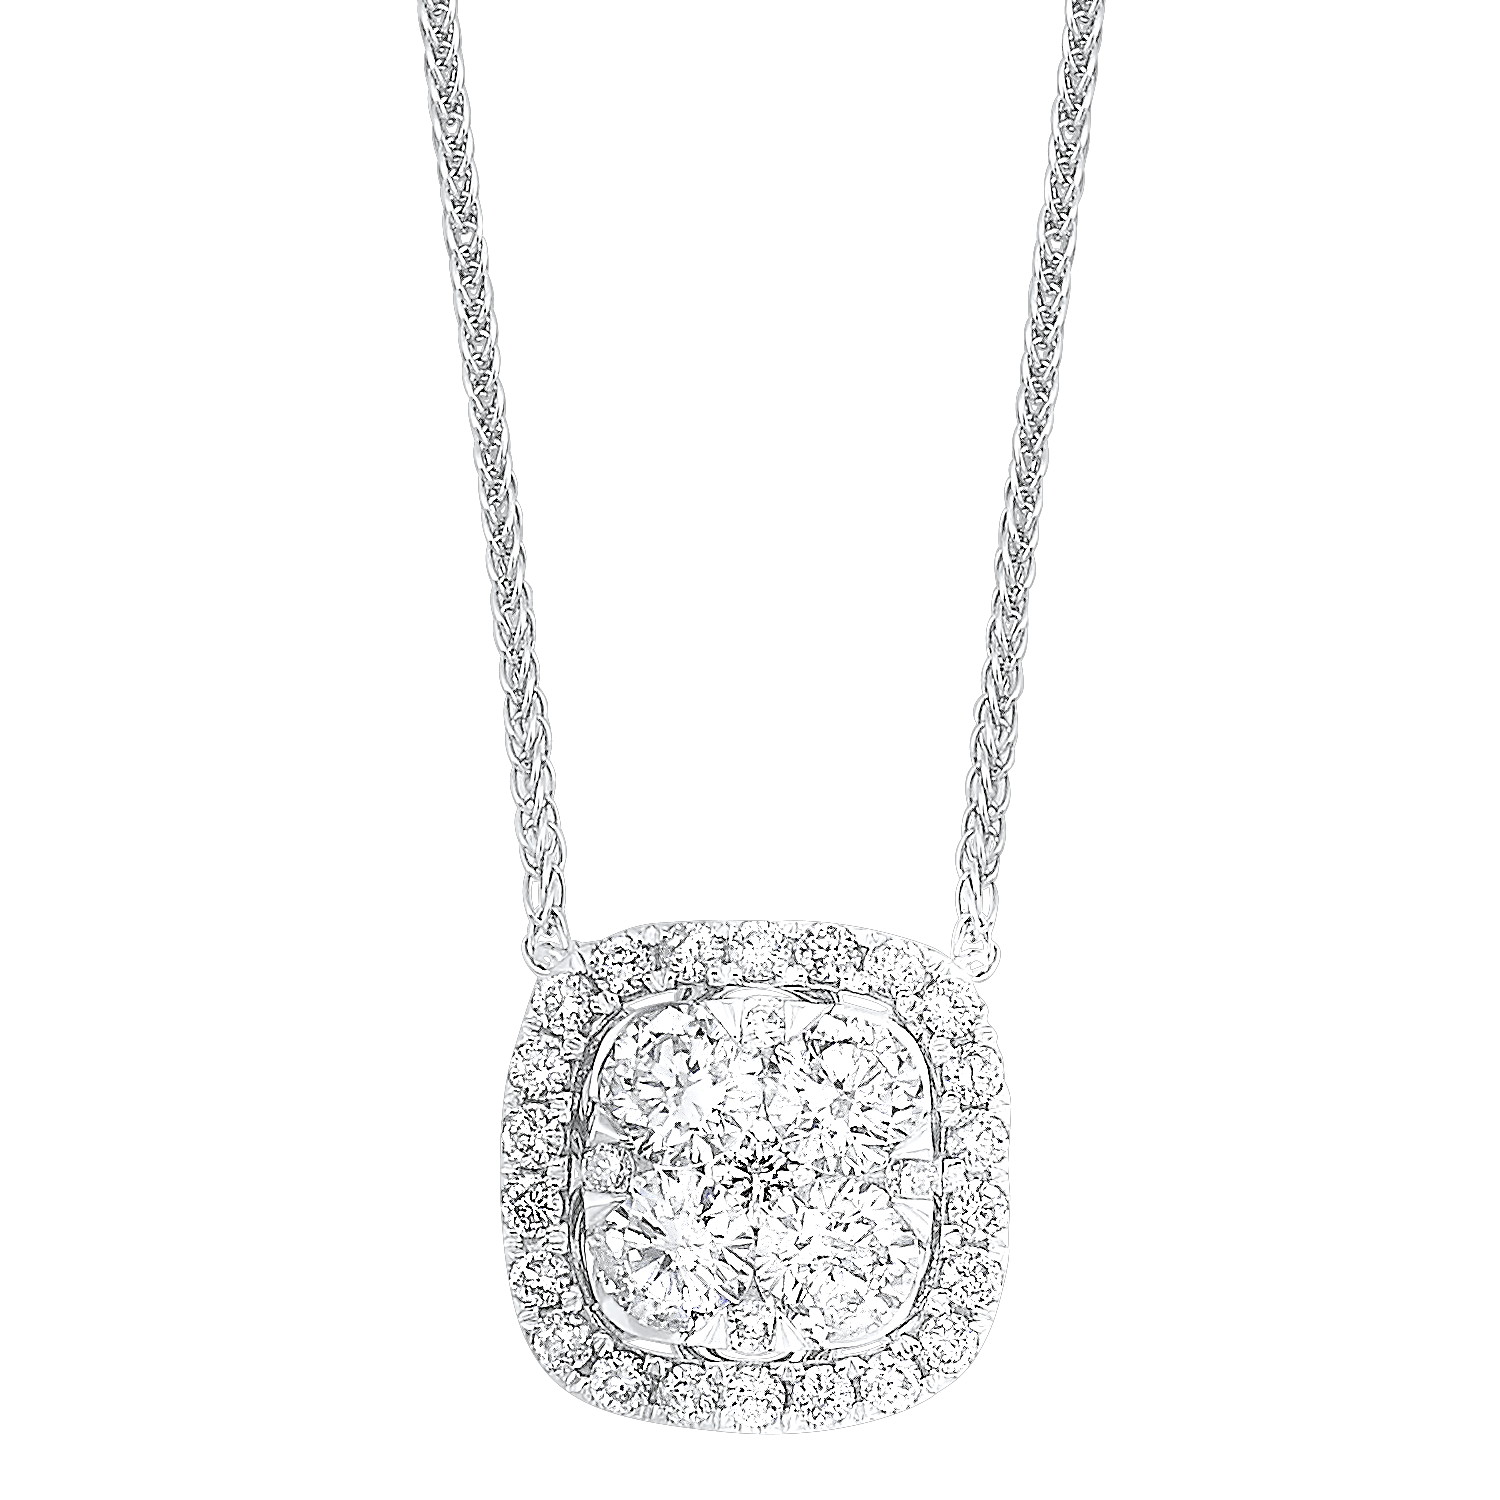 BW James Jewelers Pendant 16 Page Christmas Catalog Offer 14K Diamond Pendant 1/4 ctw